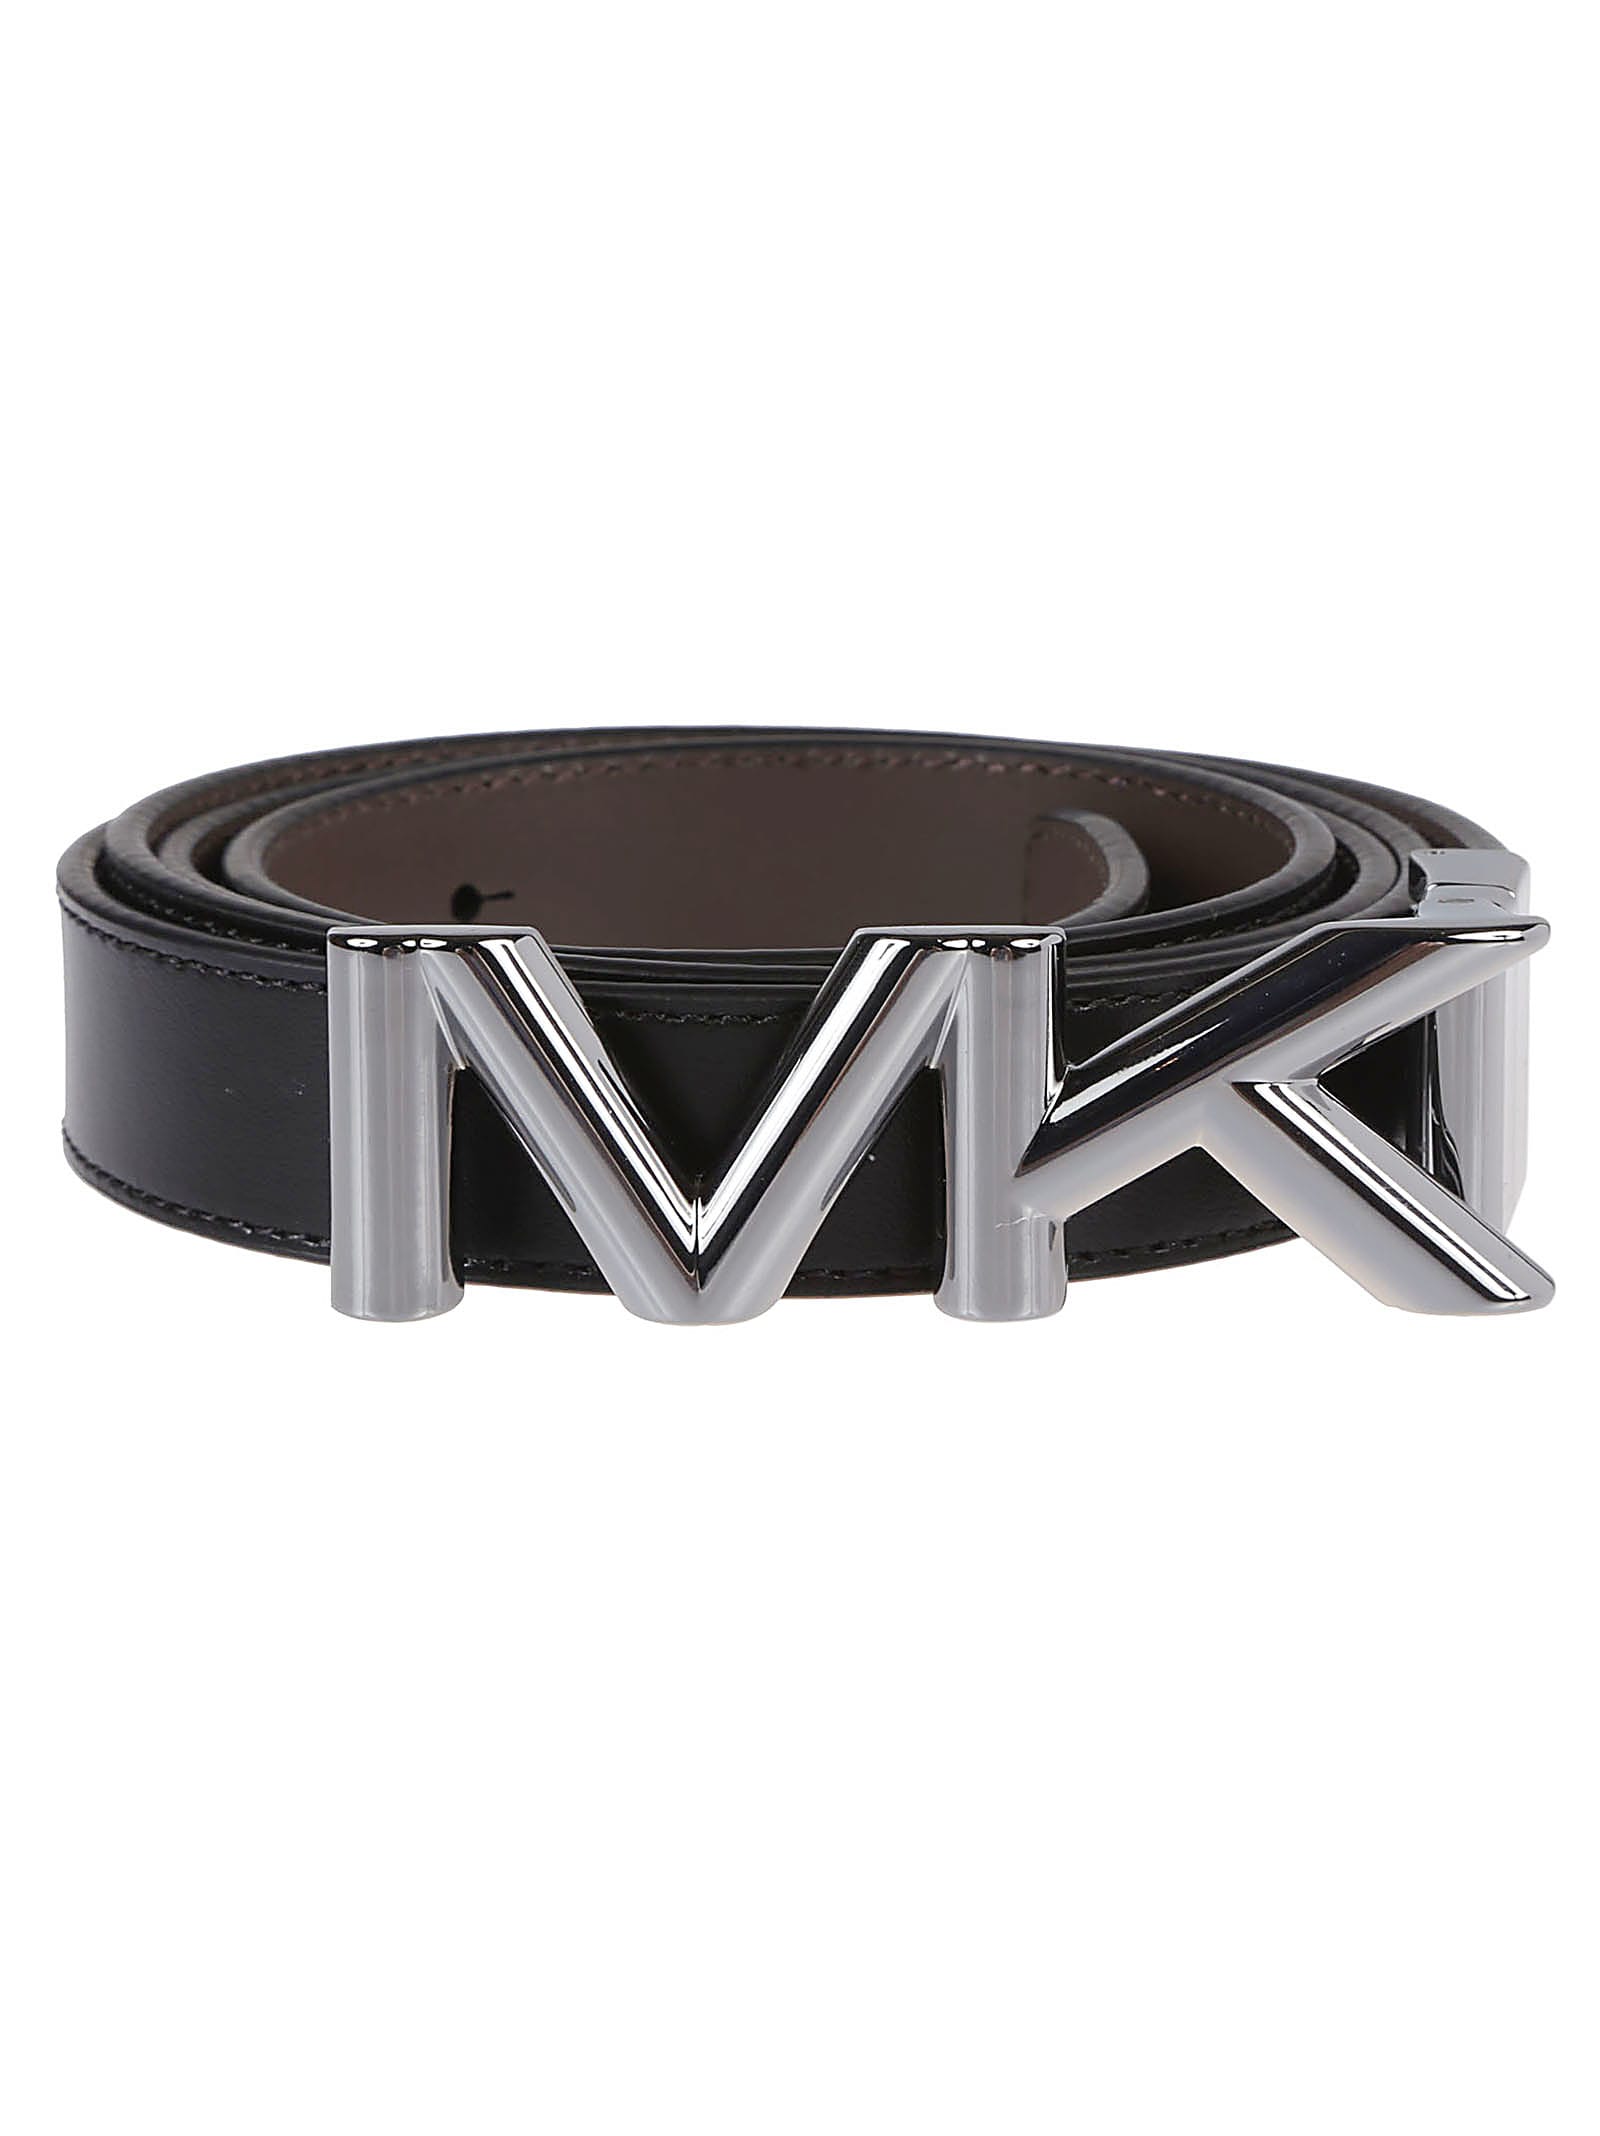 Michael Kors Reversible Belt In Black